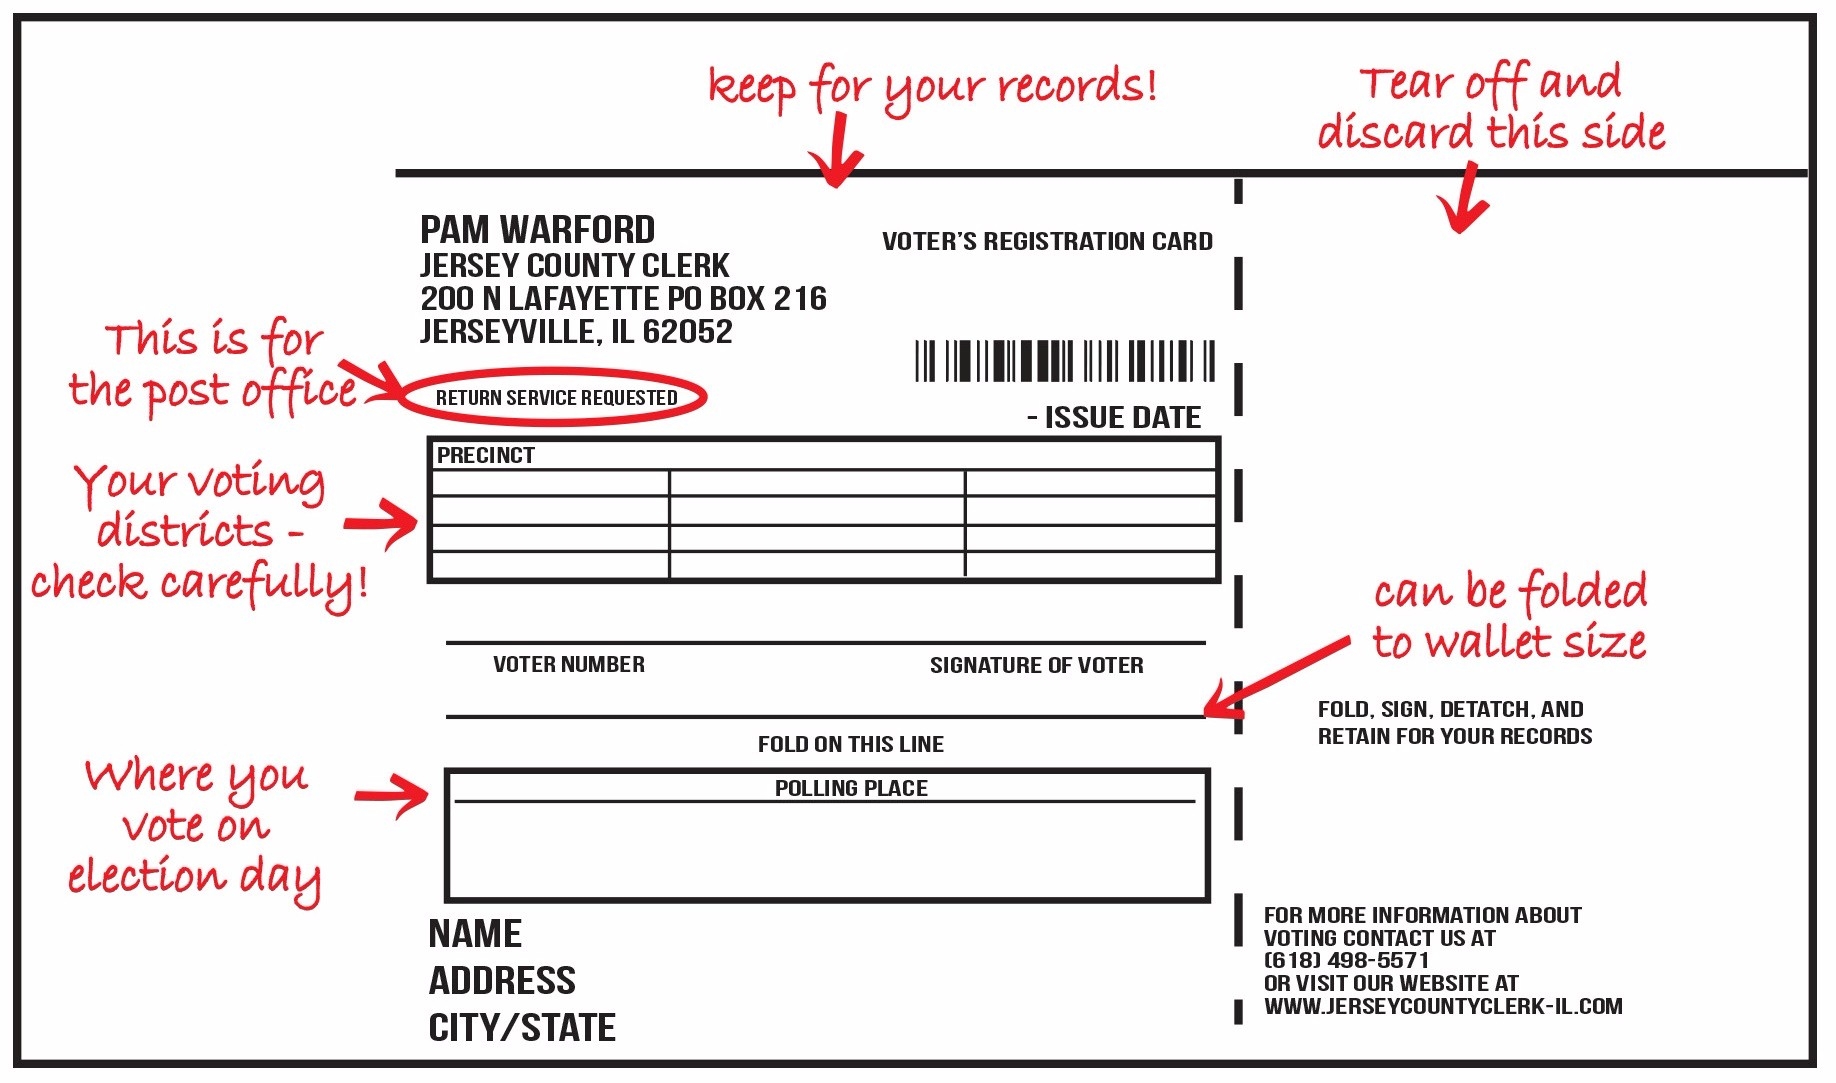 voter-registration-card-jersey-county-clerk